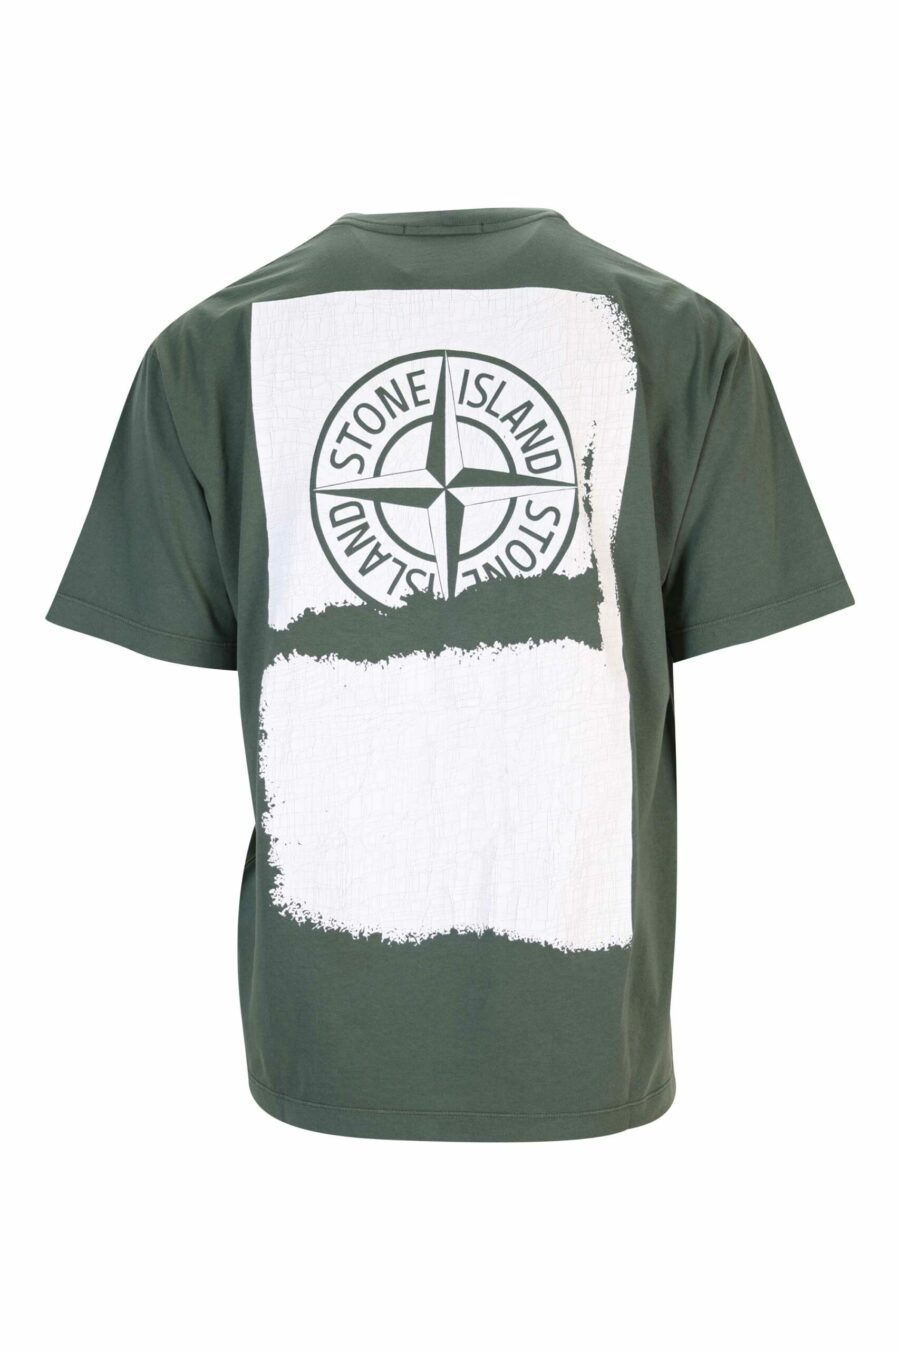 Camiseta verde militar con minilogo centrado blanco - 8052572928543 1 scaled